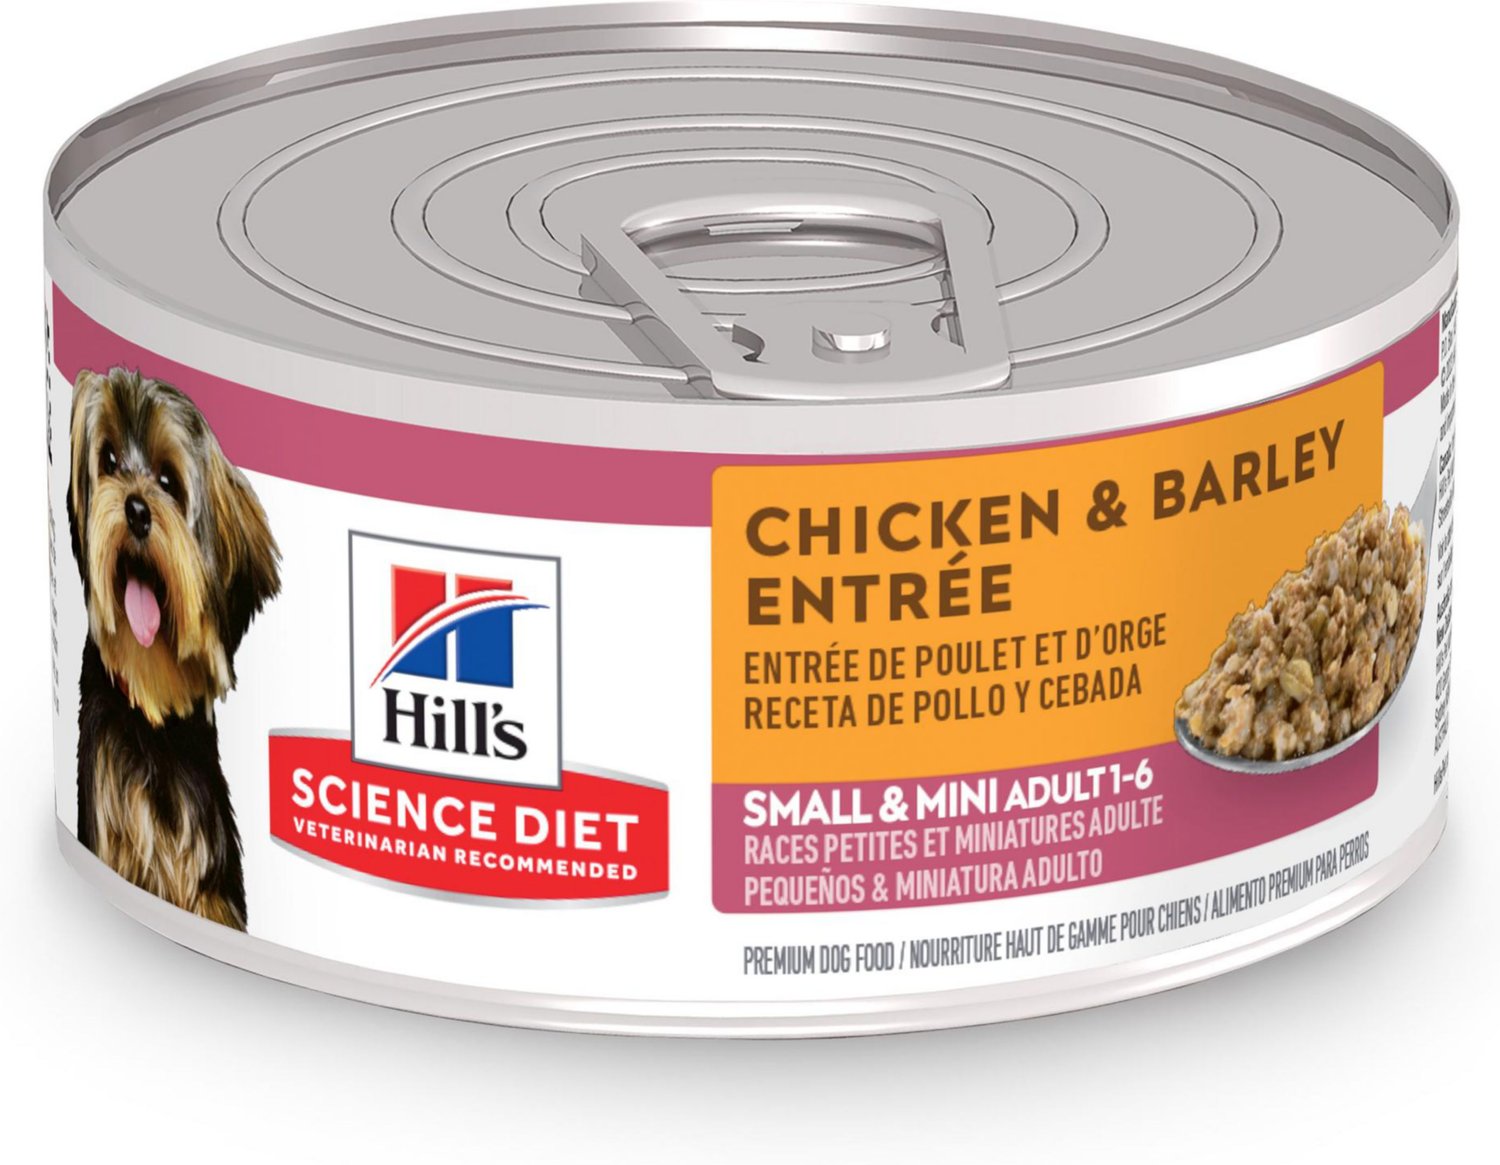 Hill's Science diet shih tzu dog food